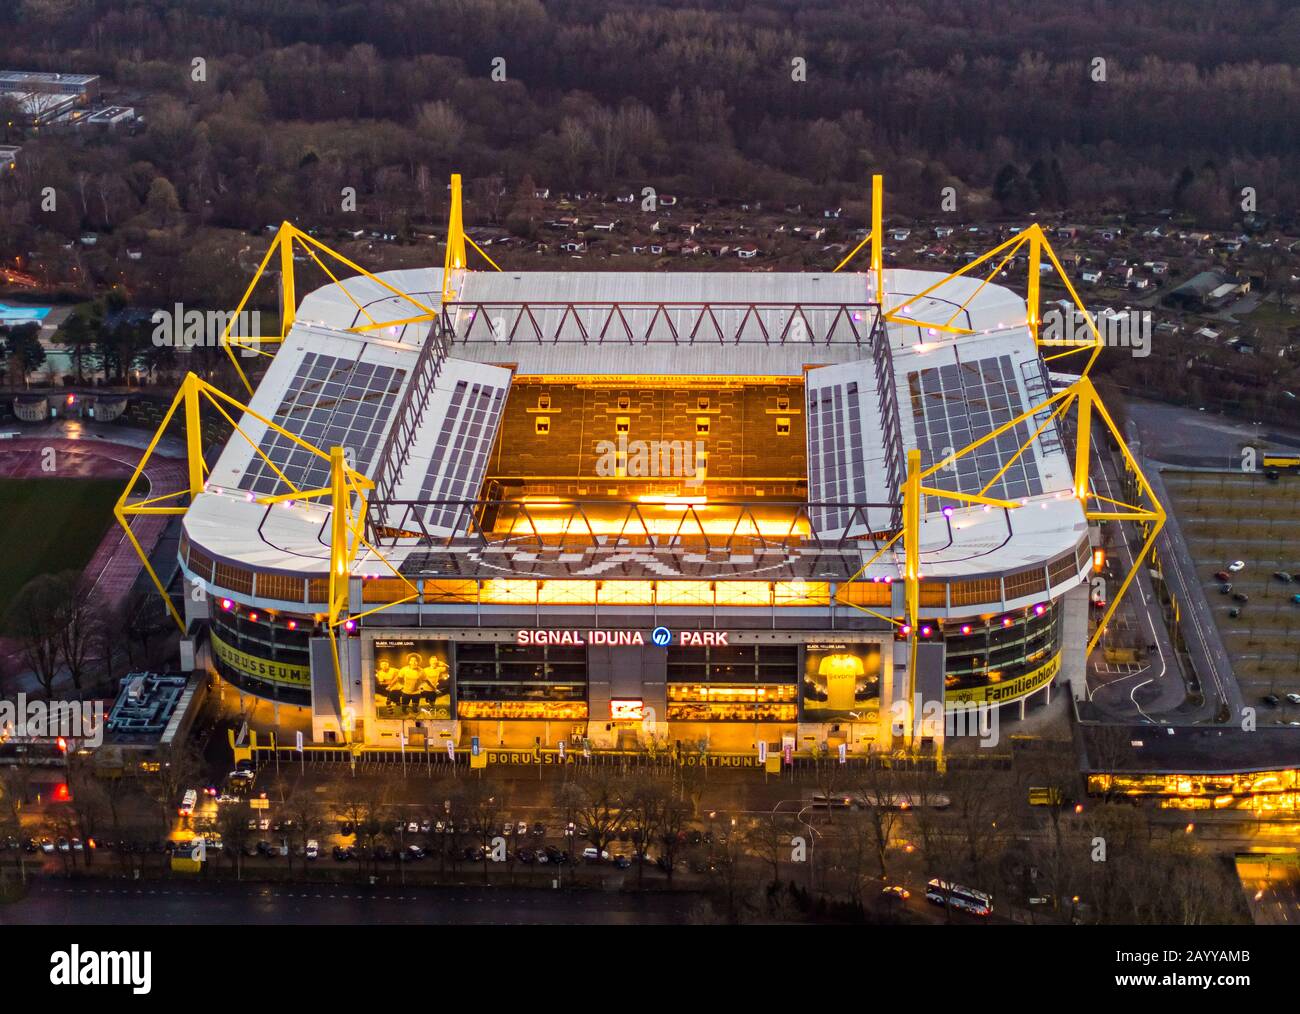 Aerial photo, Signal Iduna Park, SignalIdunaPark, Westphalen Stadium, BVB, Bundesliga Stadium, , Dortmund, Ruhr Area, North Rhine-Westphalia, Germany, Stock Photo